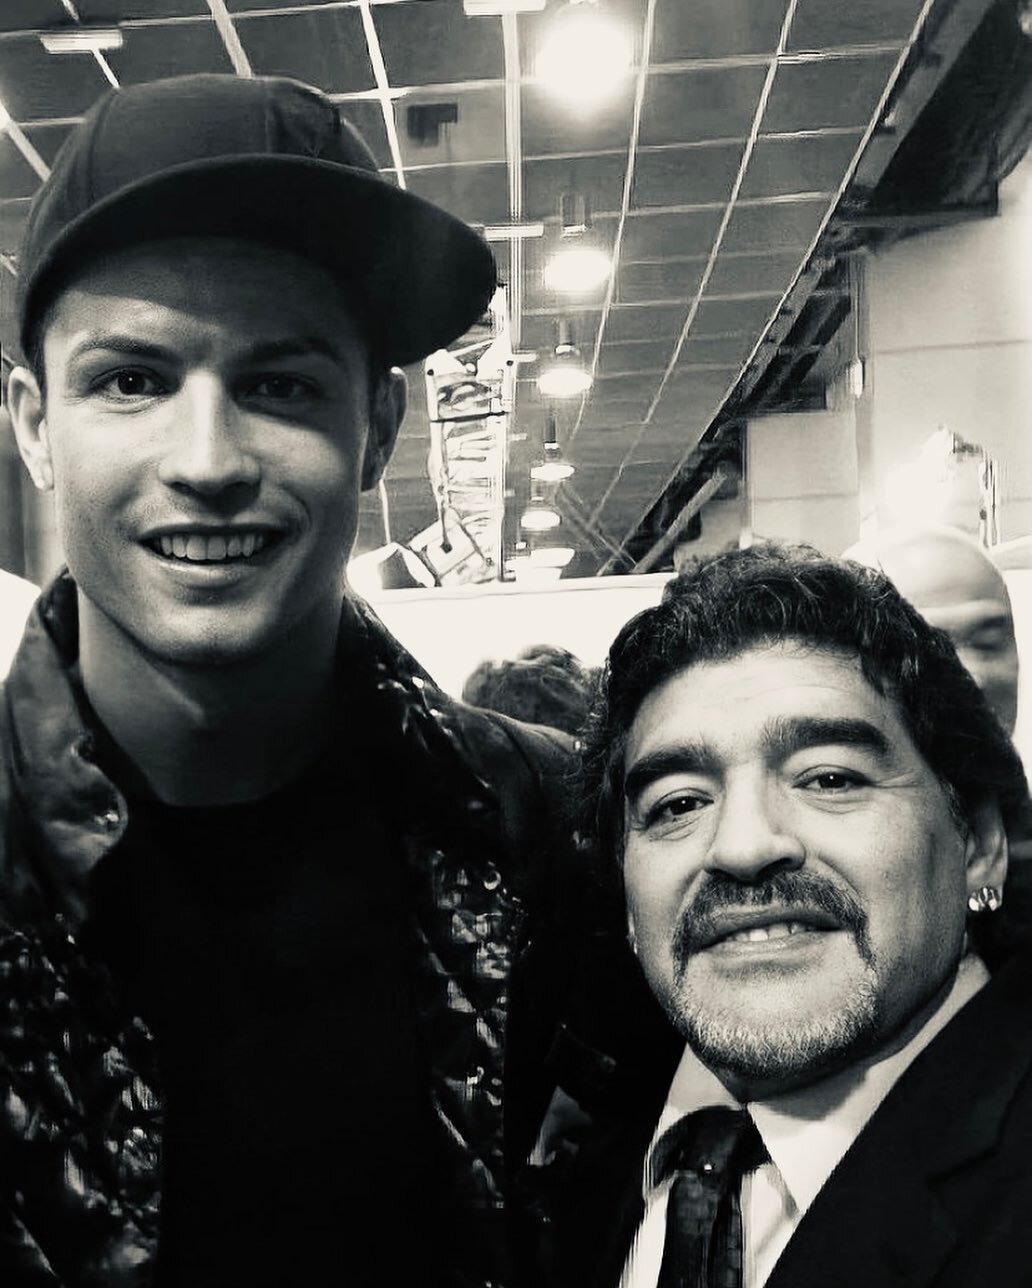 Cristiano Ronaldo y Maradona